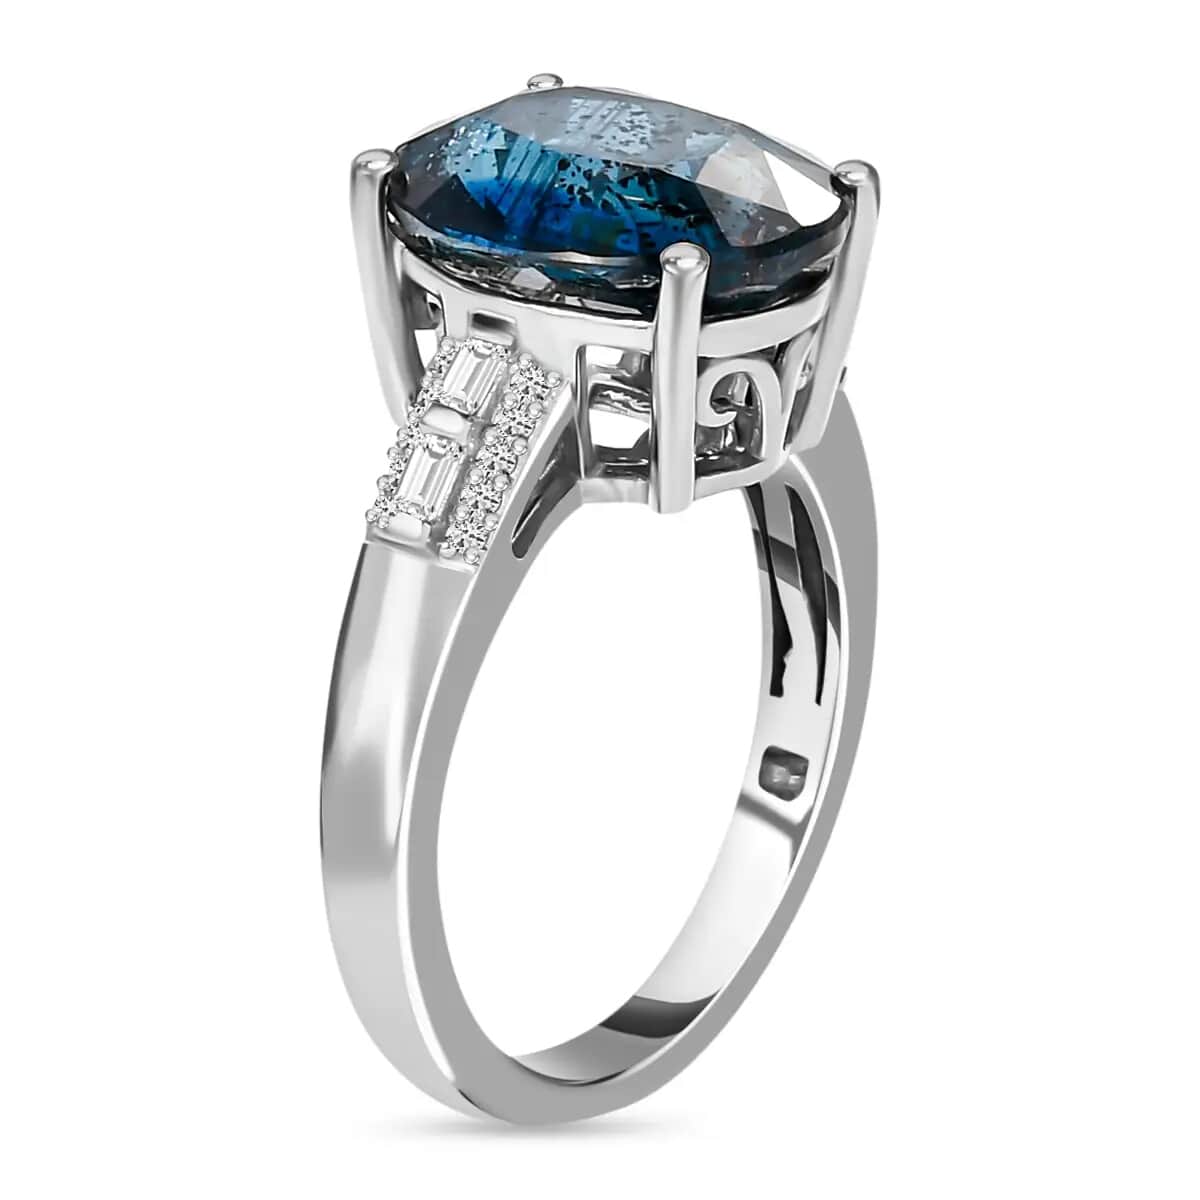 Premium Indigo Kyanite, Diamond Ring in Platinum Over Sterling Silver|Statement Ring For Women 5.80 ctw (Size 10.0) image number 4